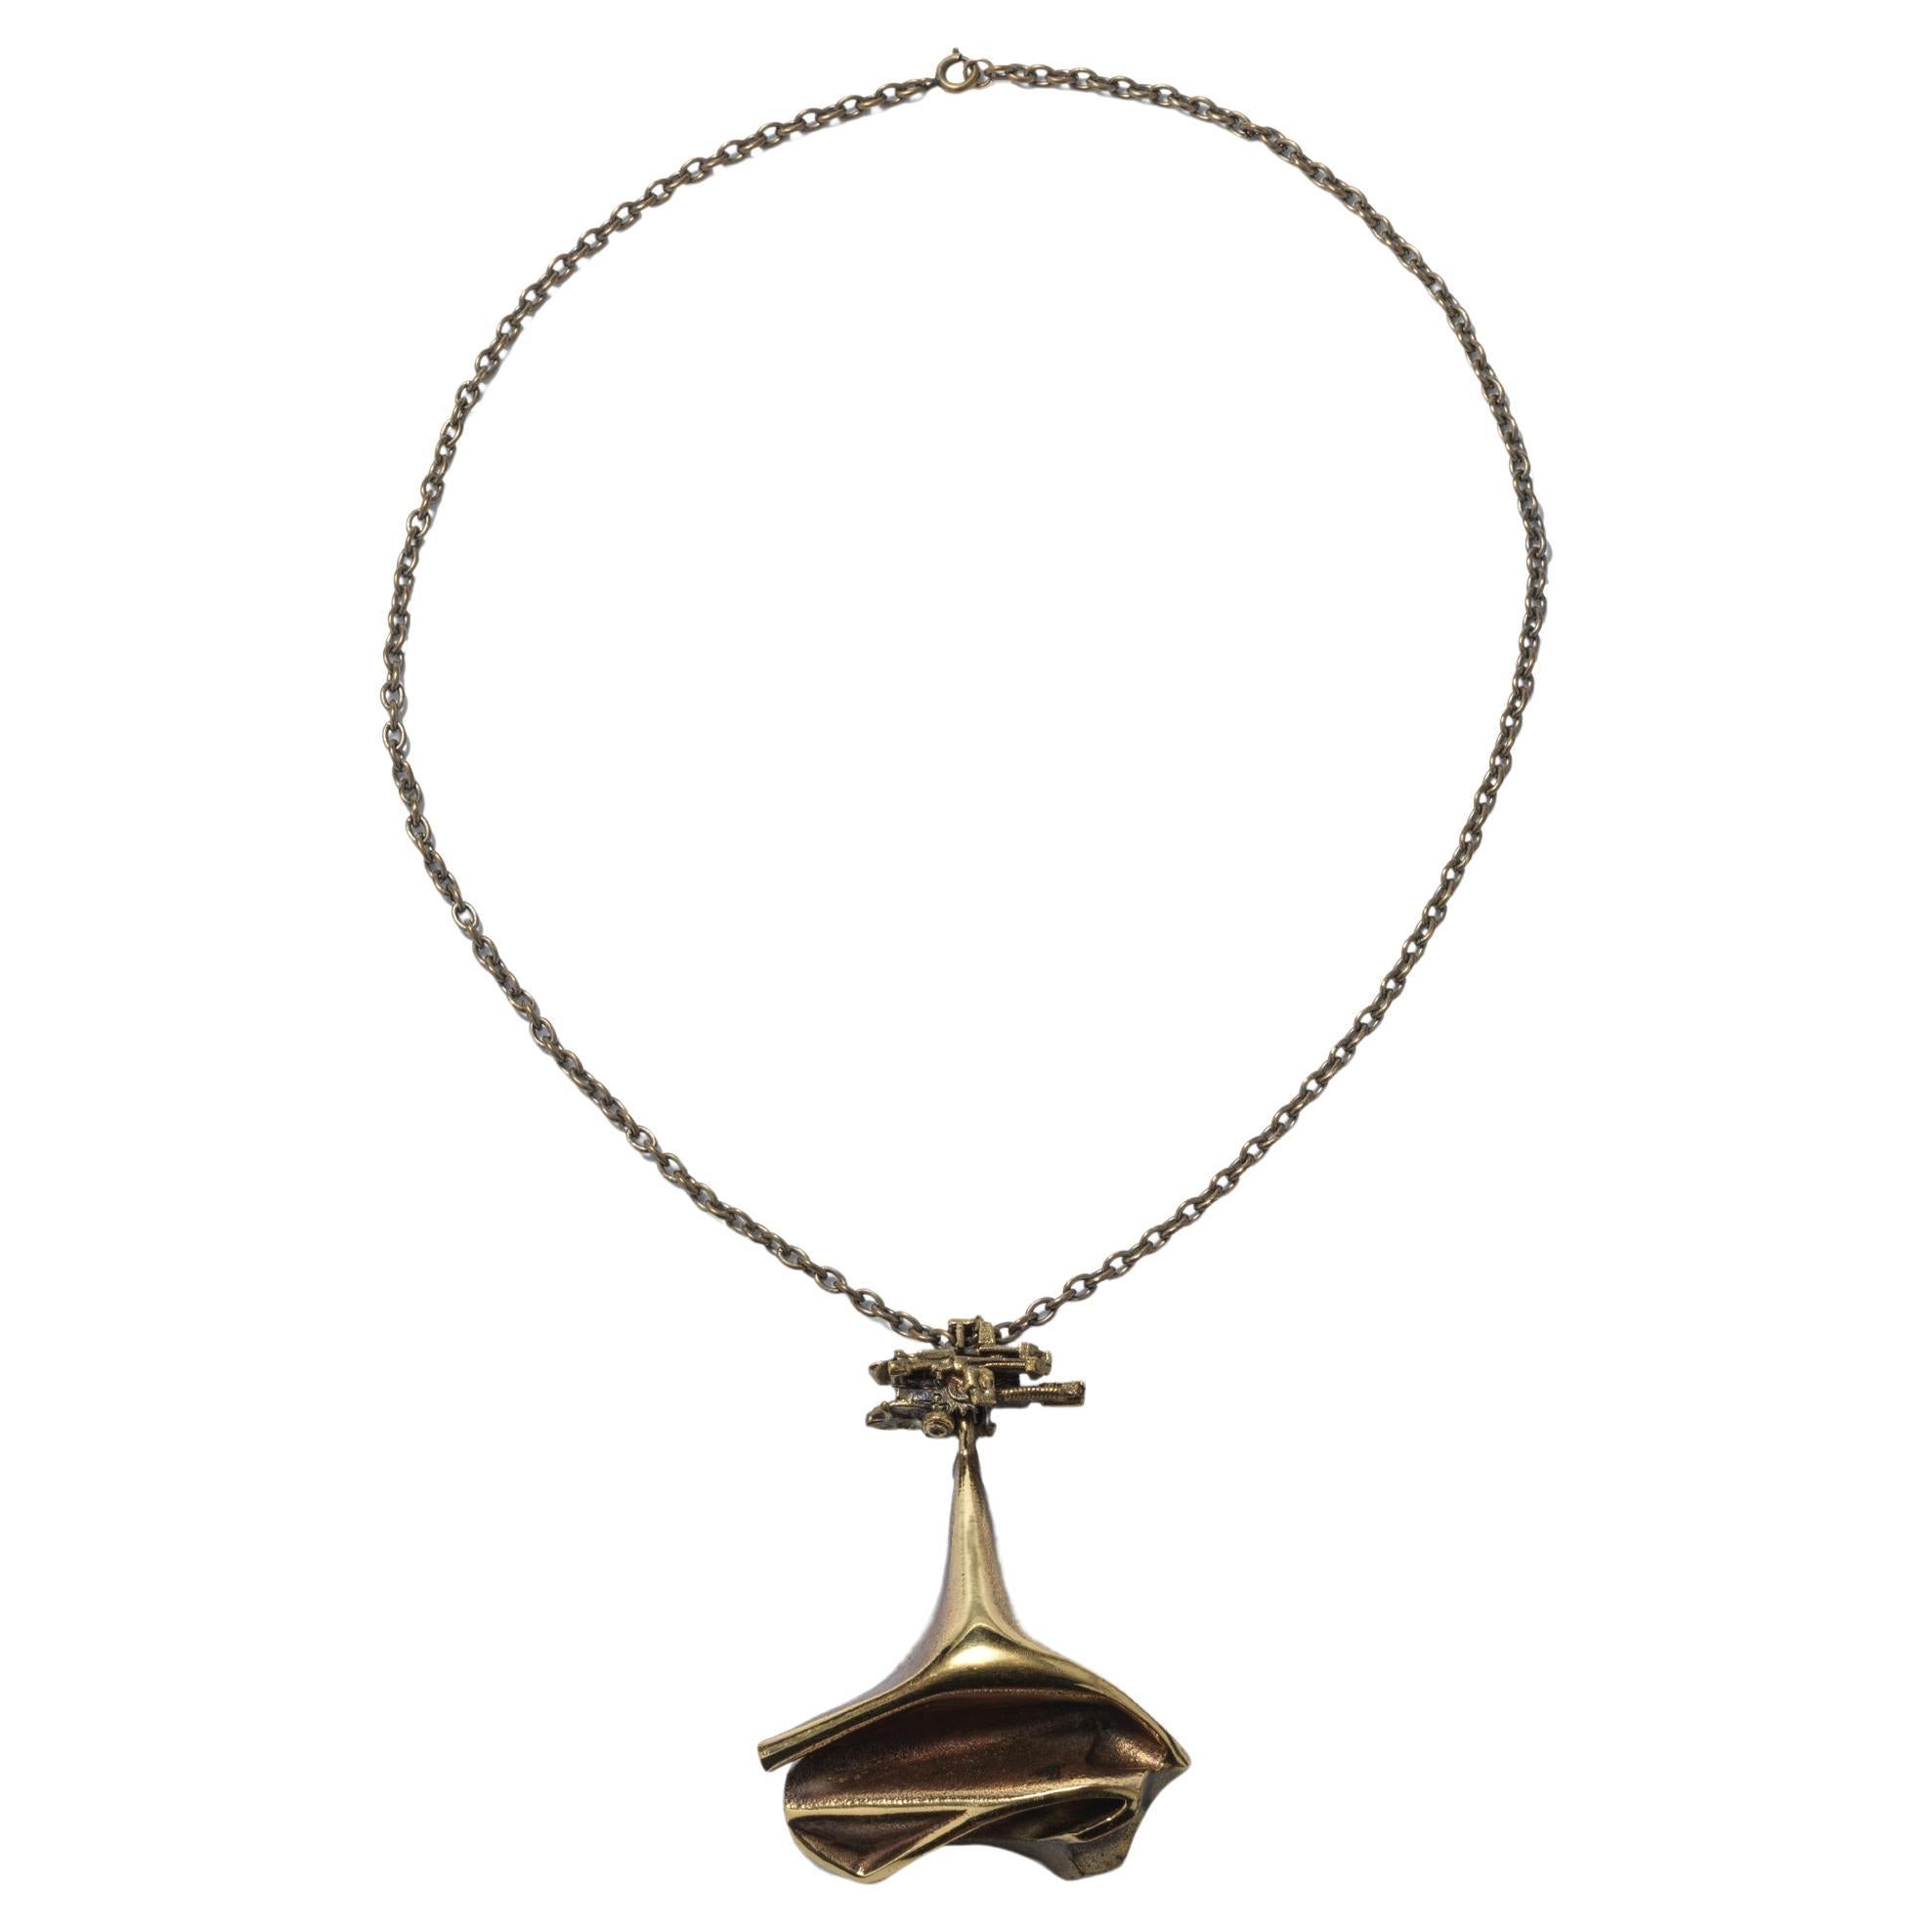 Vintage bronze necklace titled Bethlehem Steel by Lapponia.